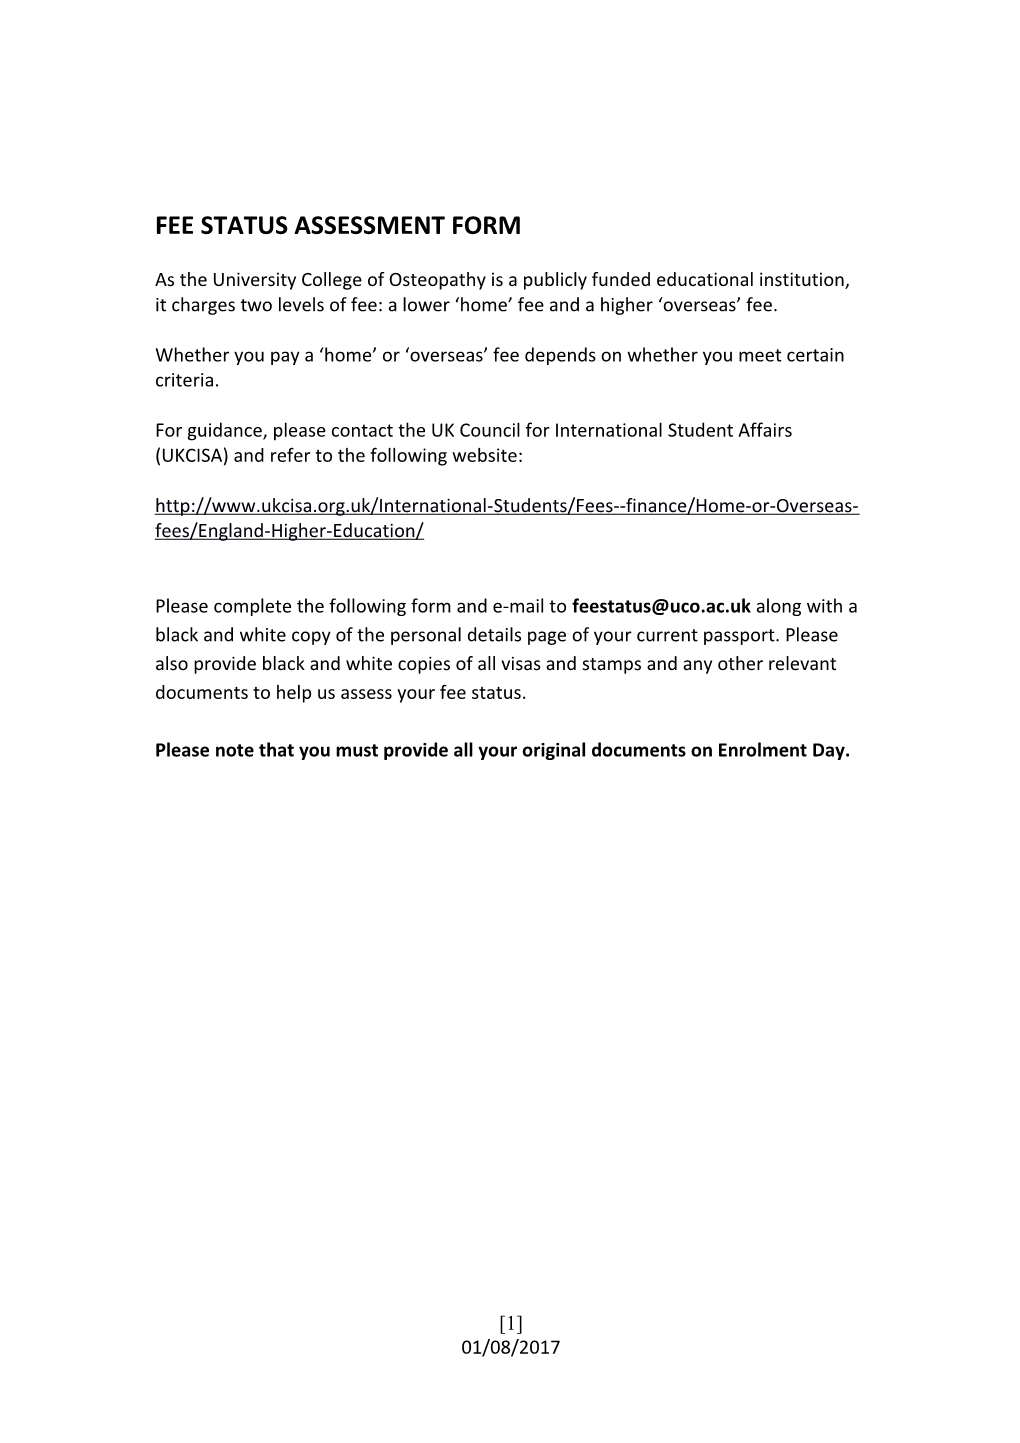 Fee Status Assessment Form